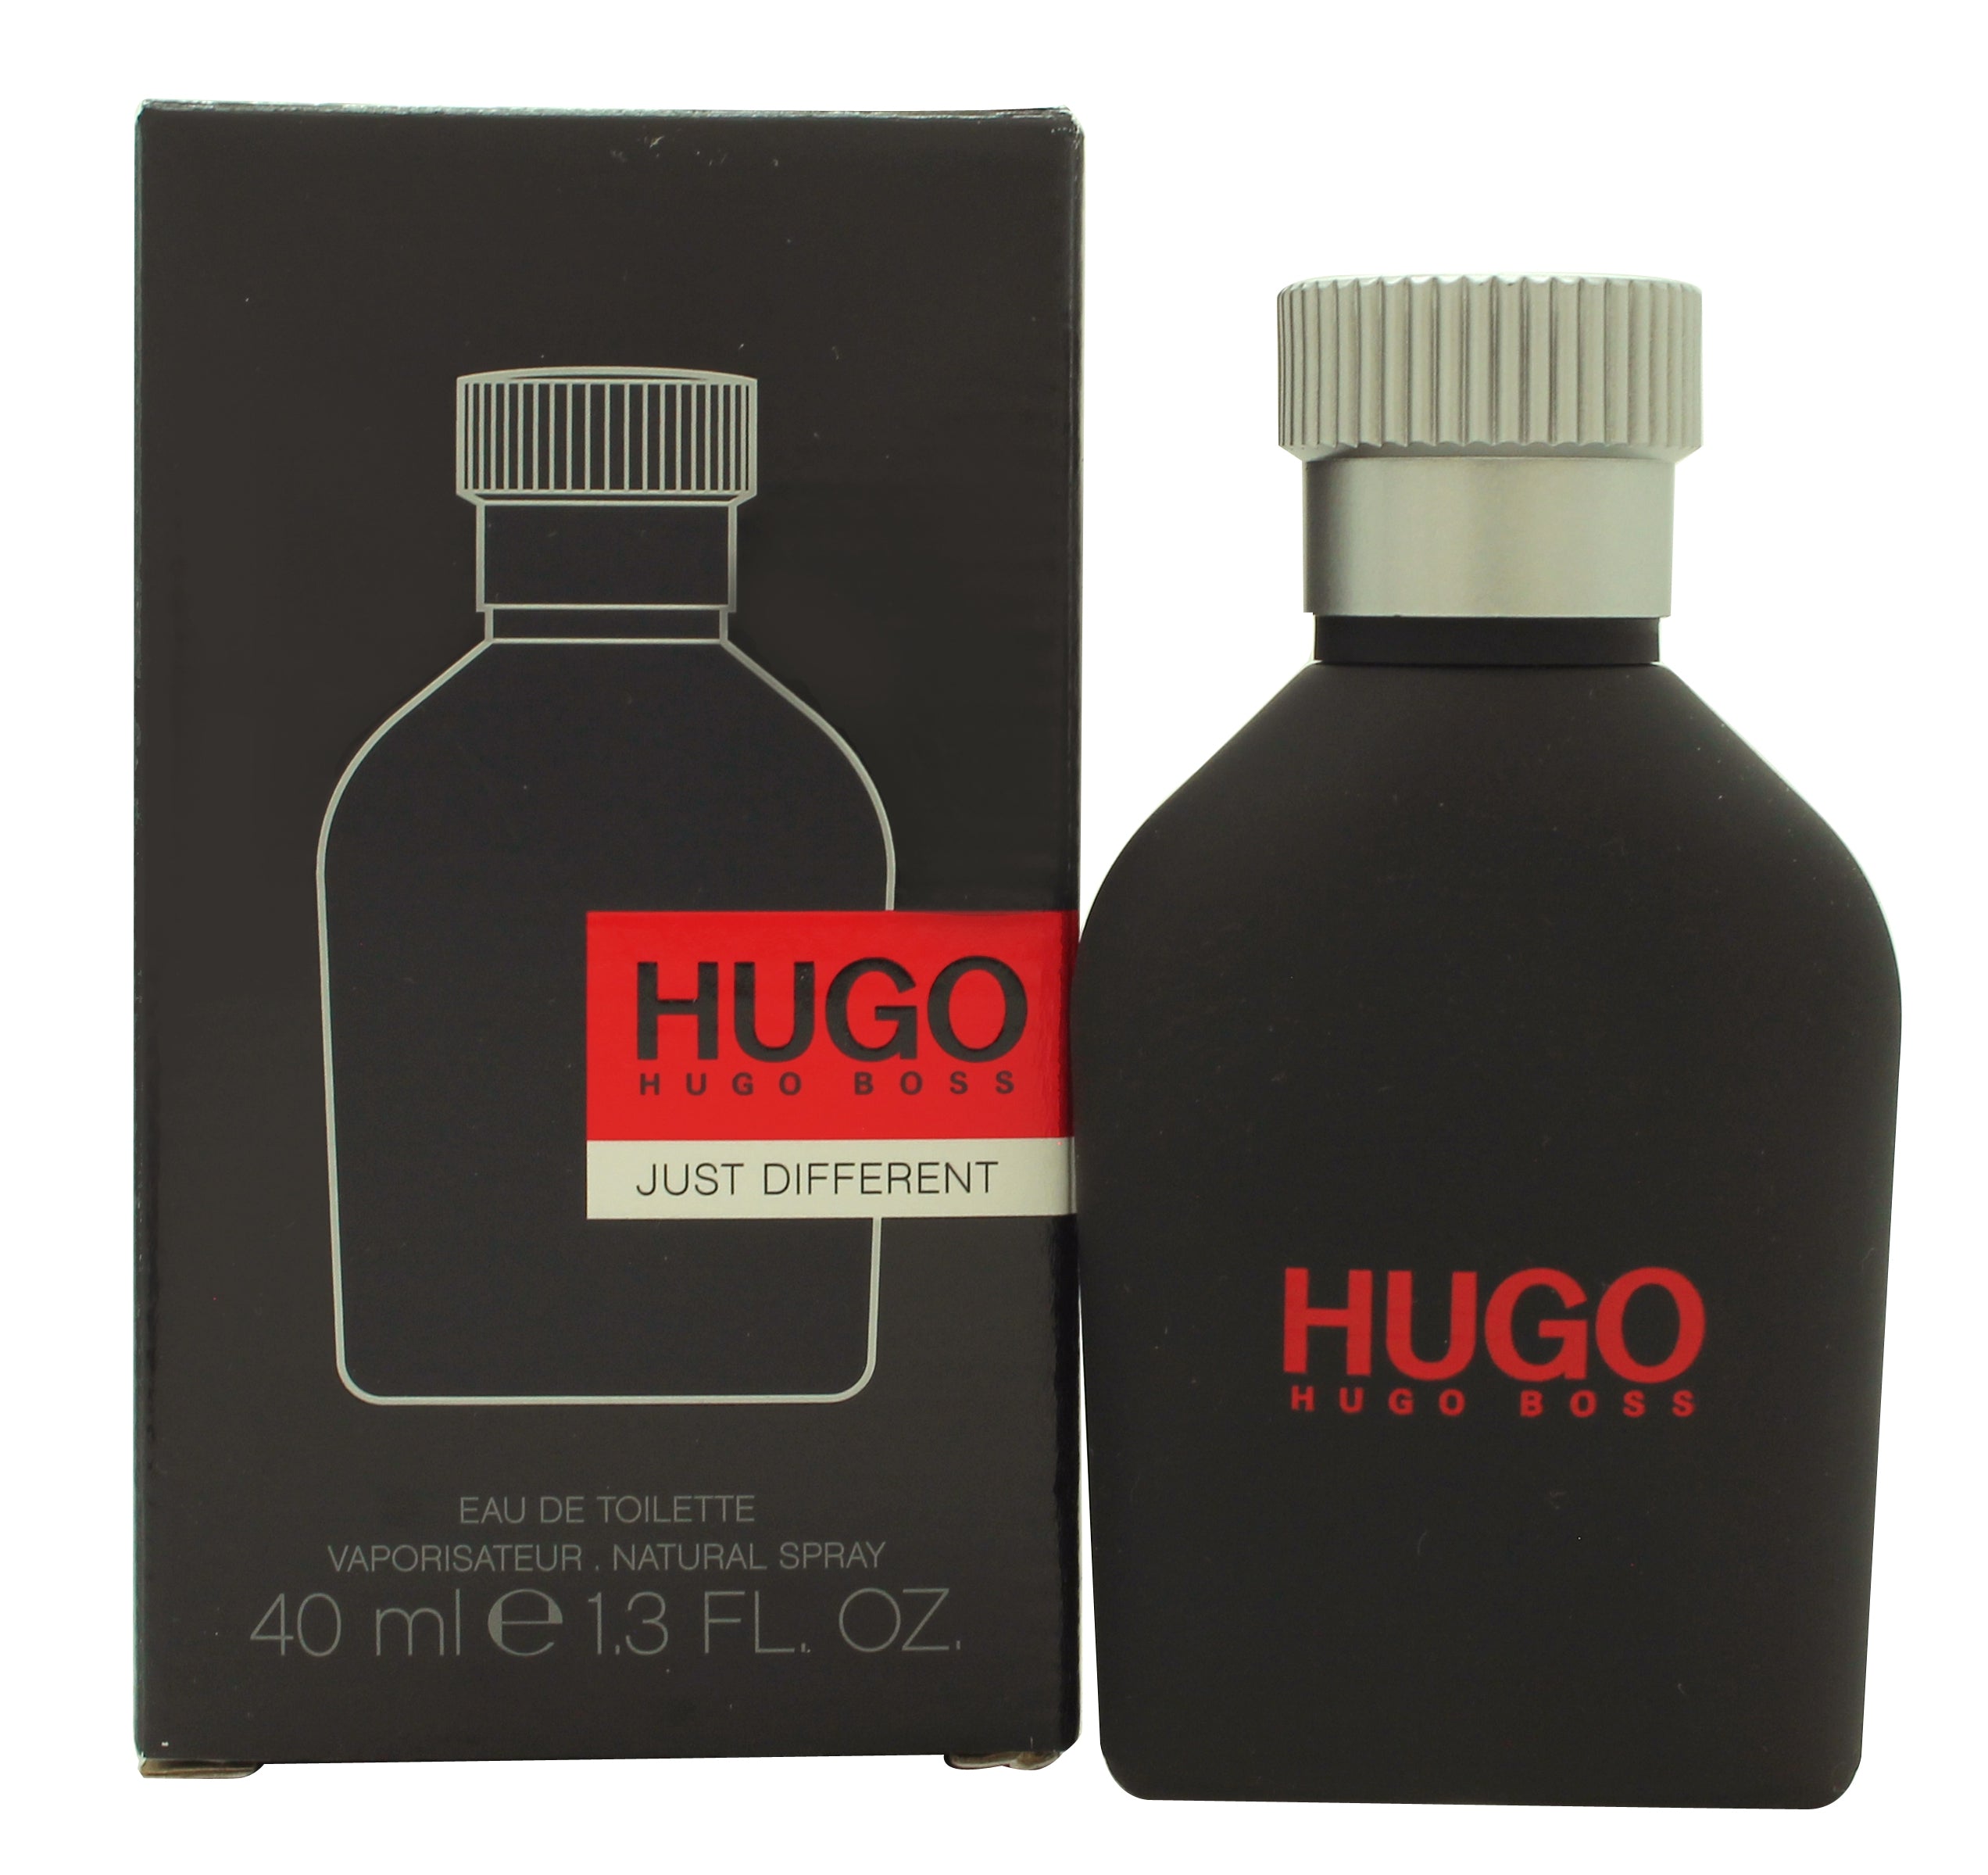 View Hugo Boss Just Different Eau de Toilette 40ml Spray information